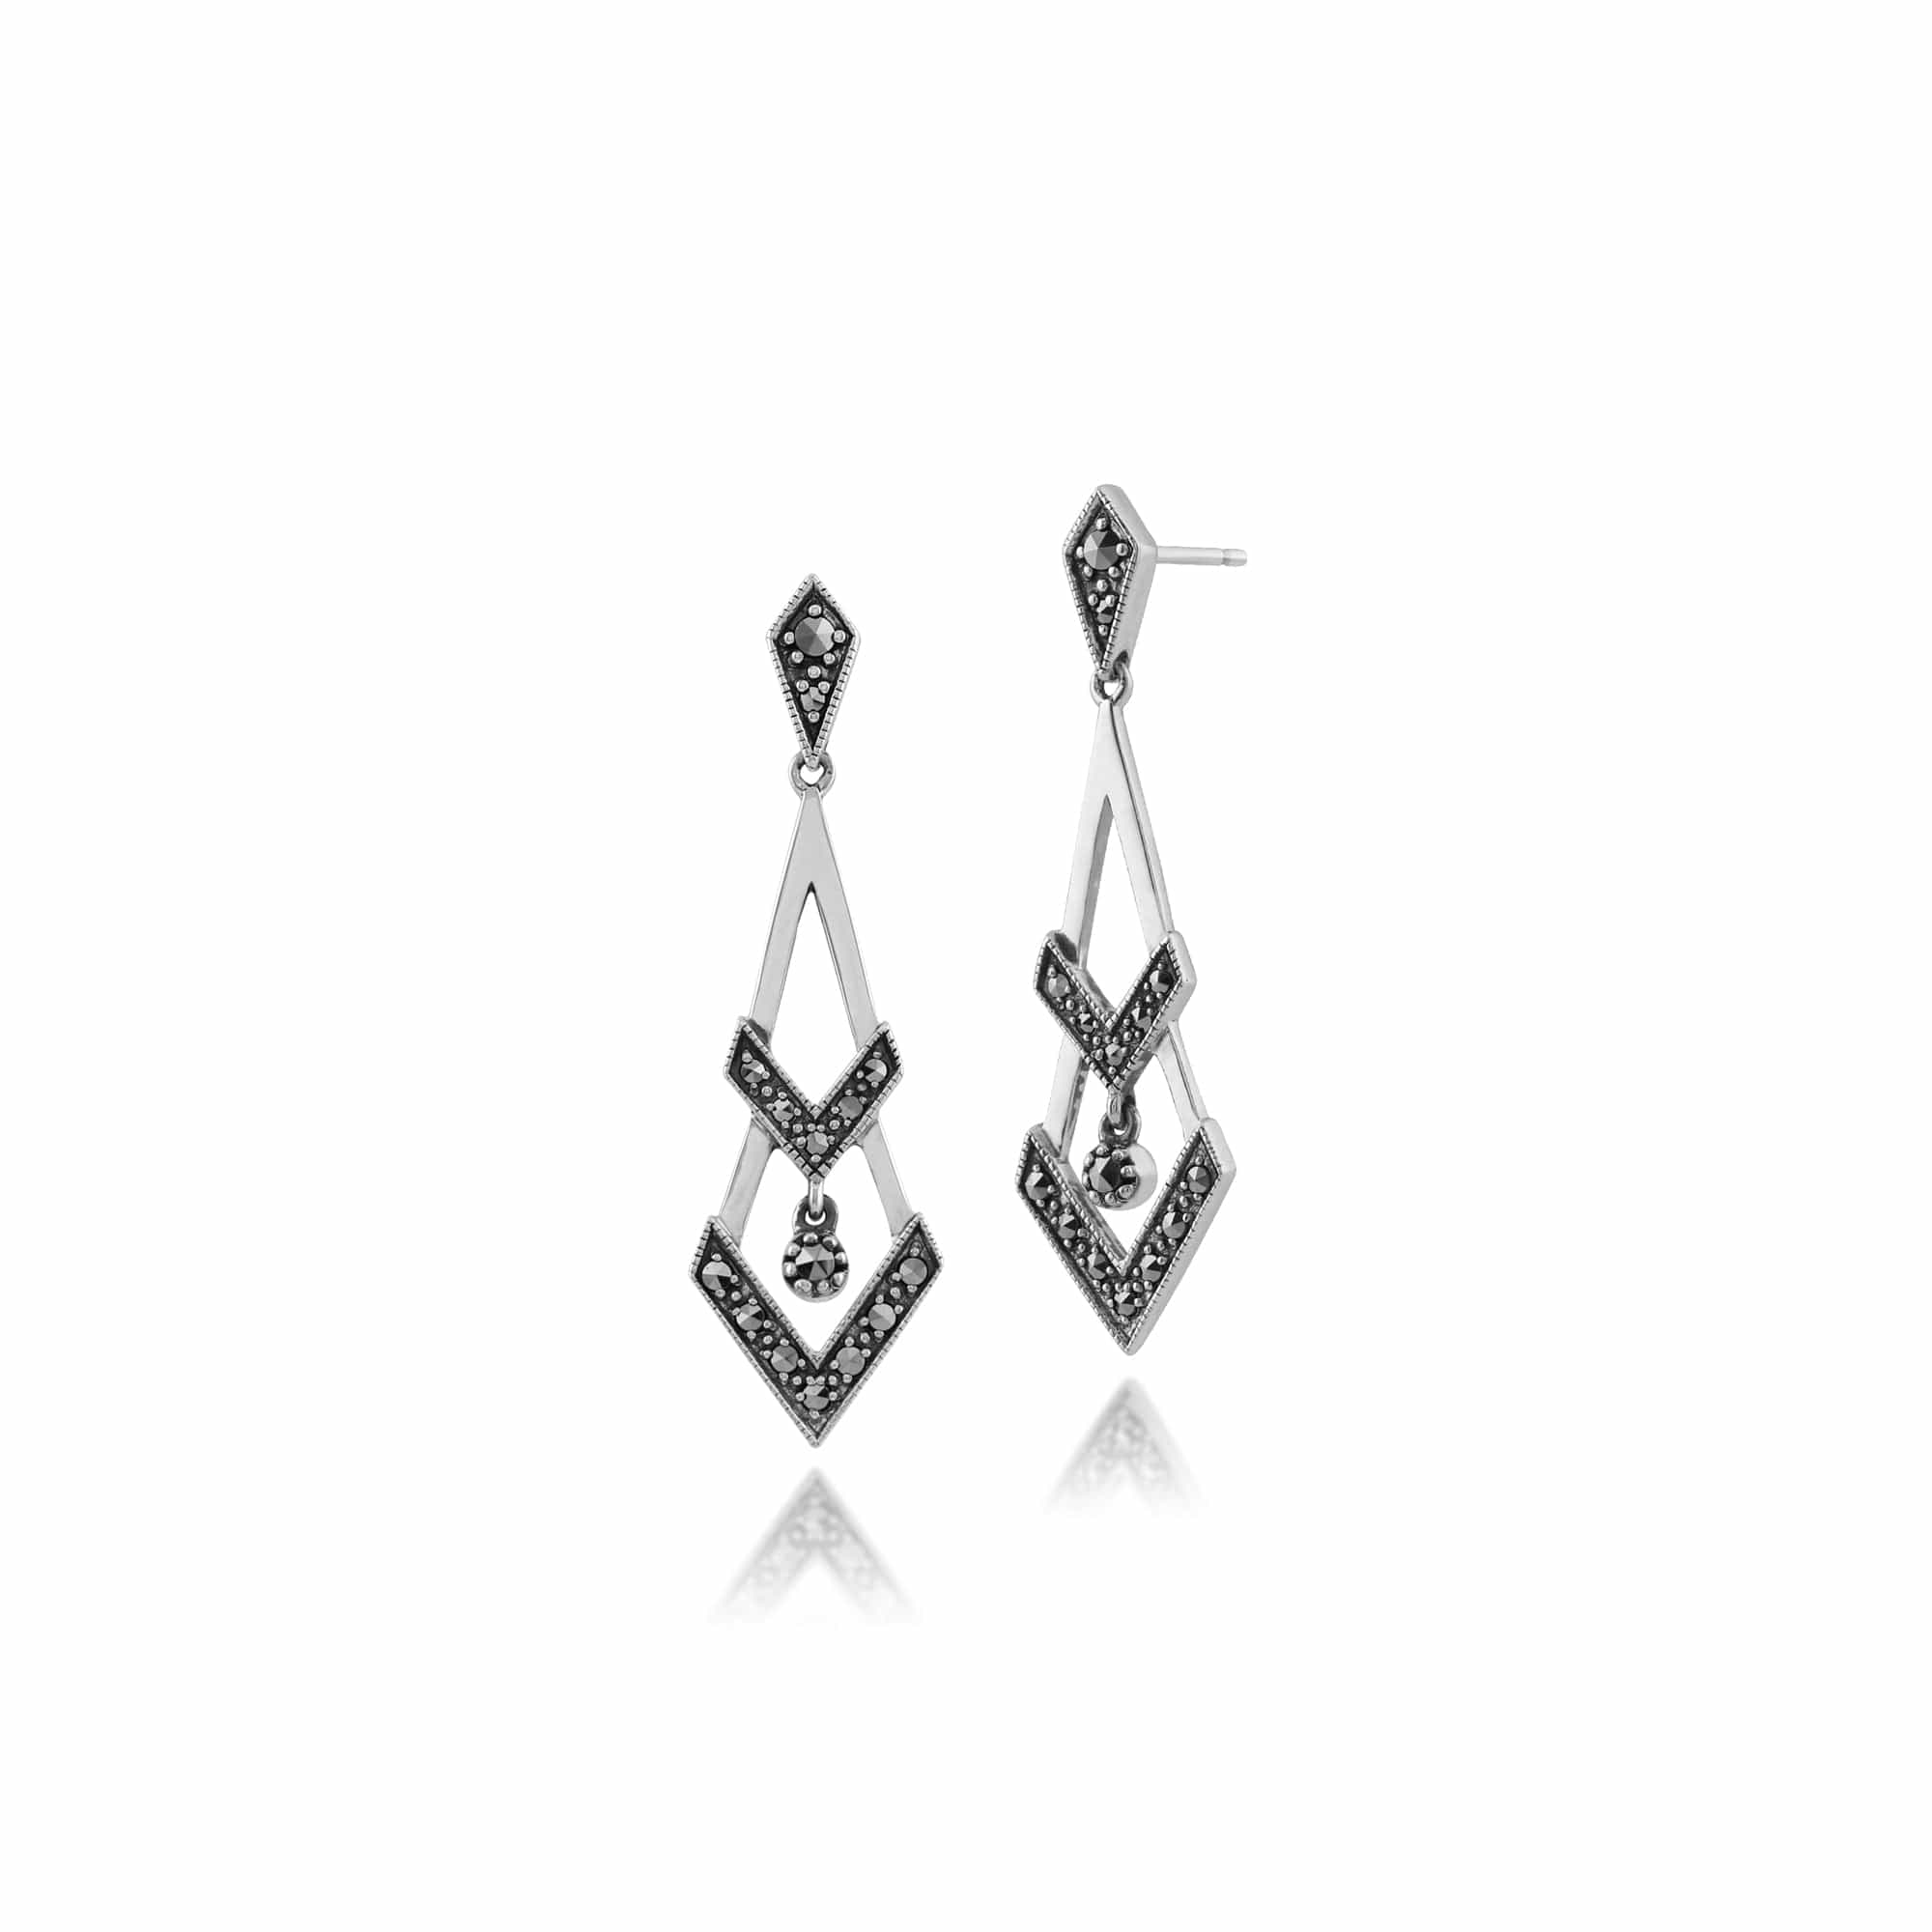 Art Deco Style Round Marcasite Open Work Triangular Drop Earrings in 925 Sterling Silver - Gemondo